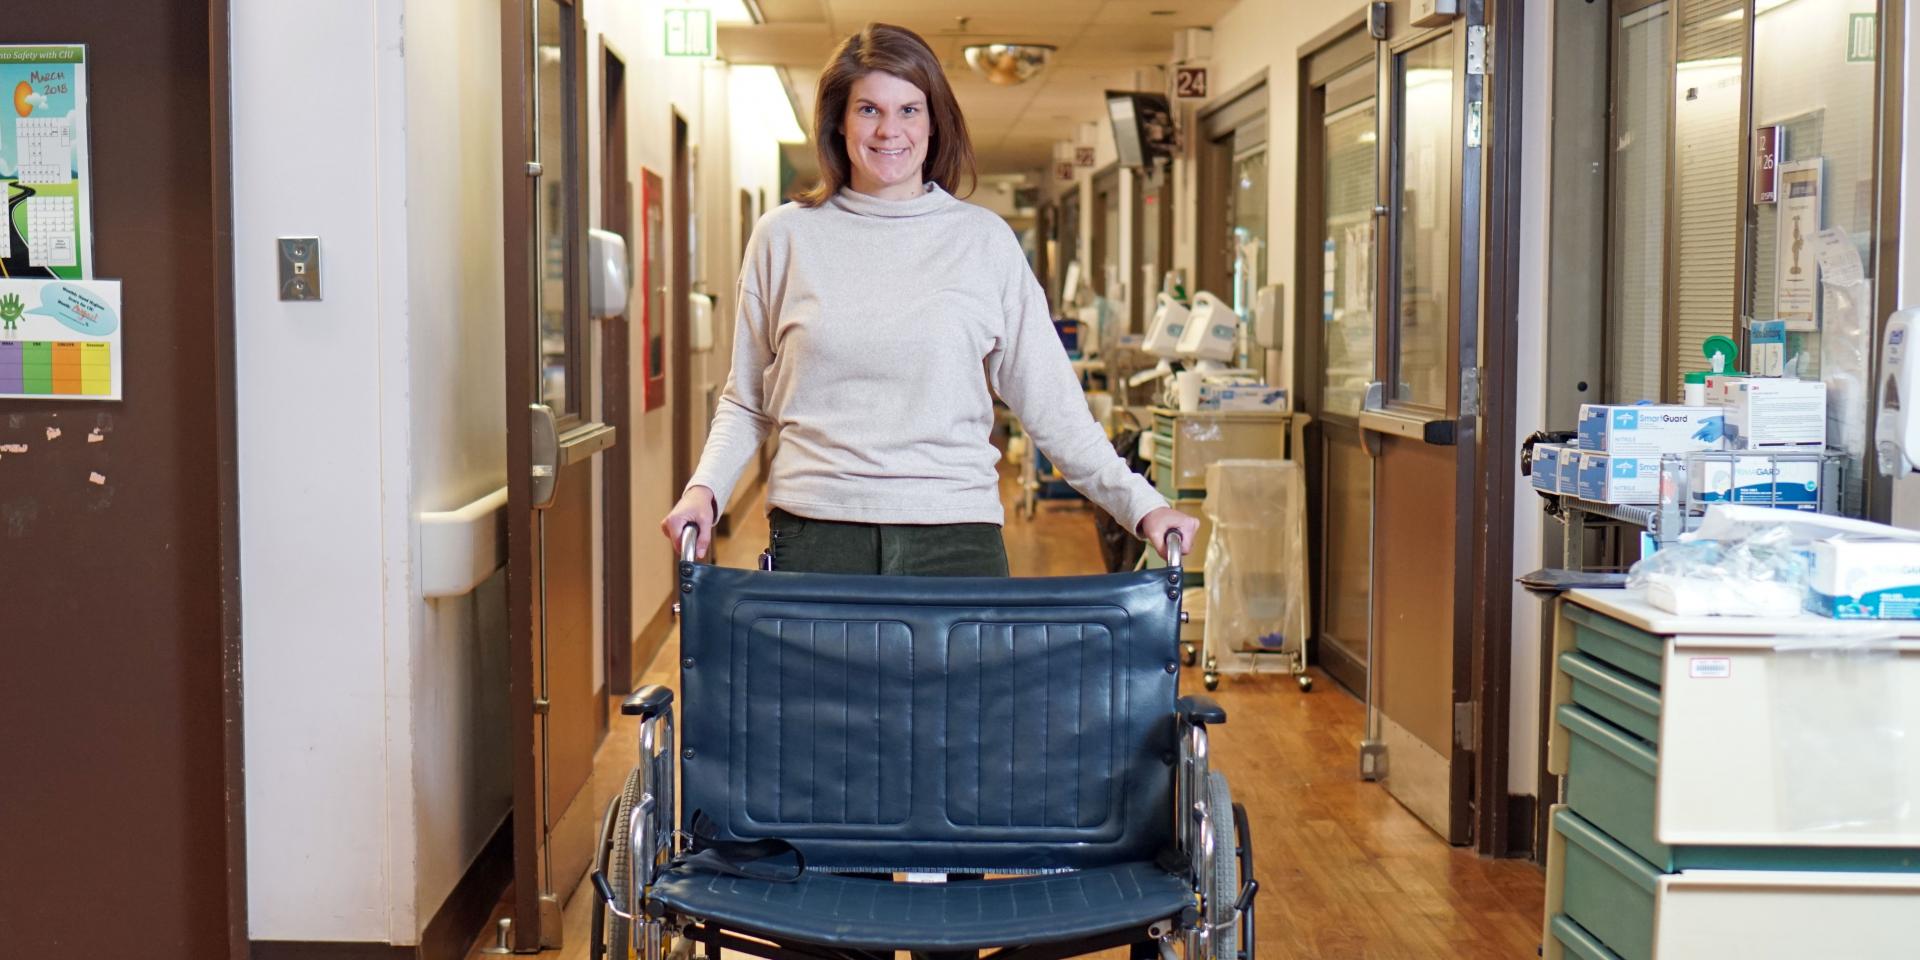 Sarah Bingler with bariatric wheelchair.